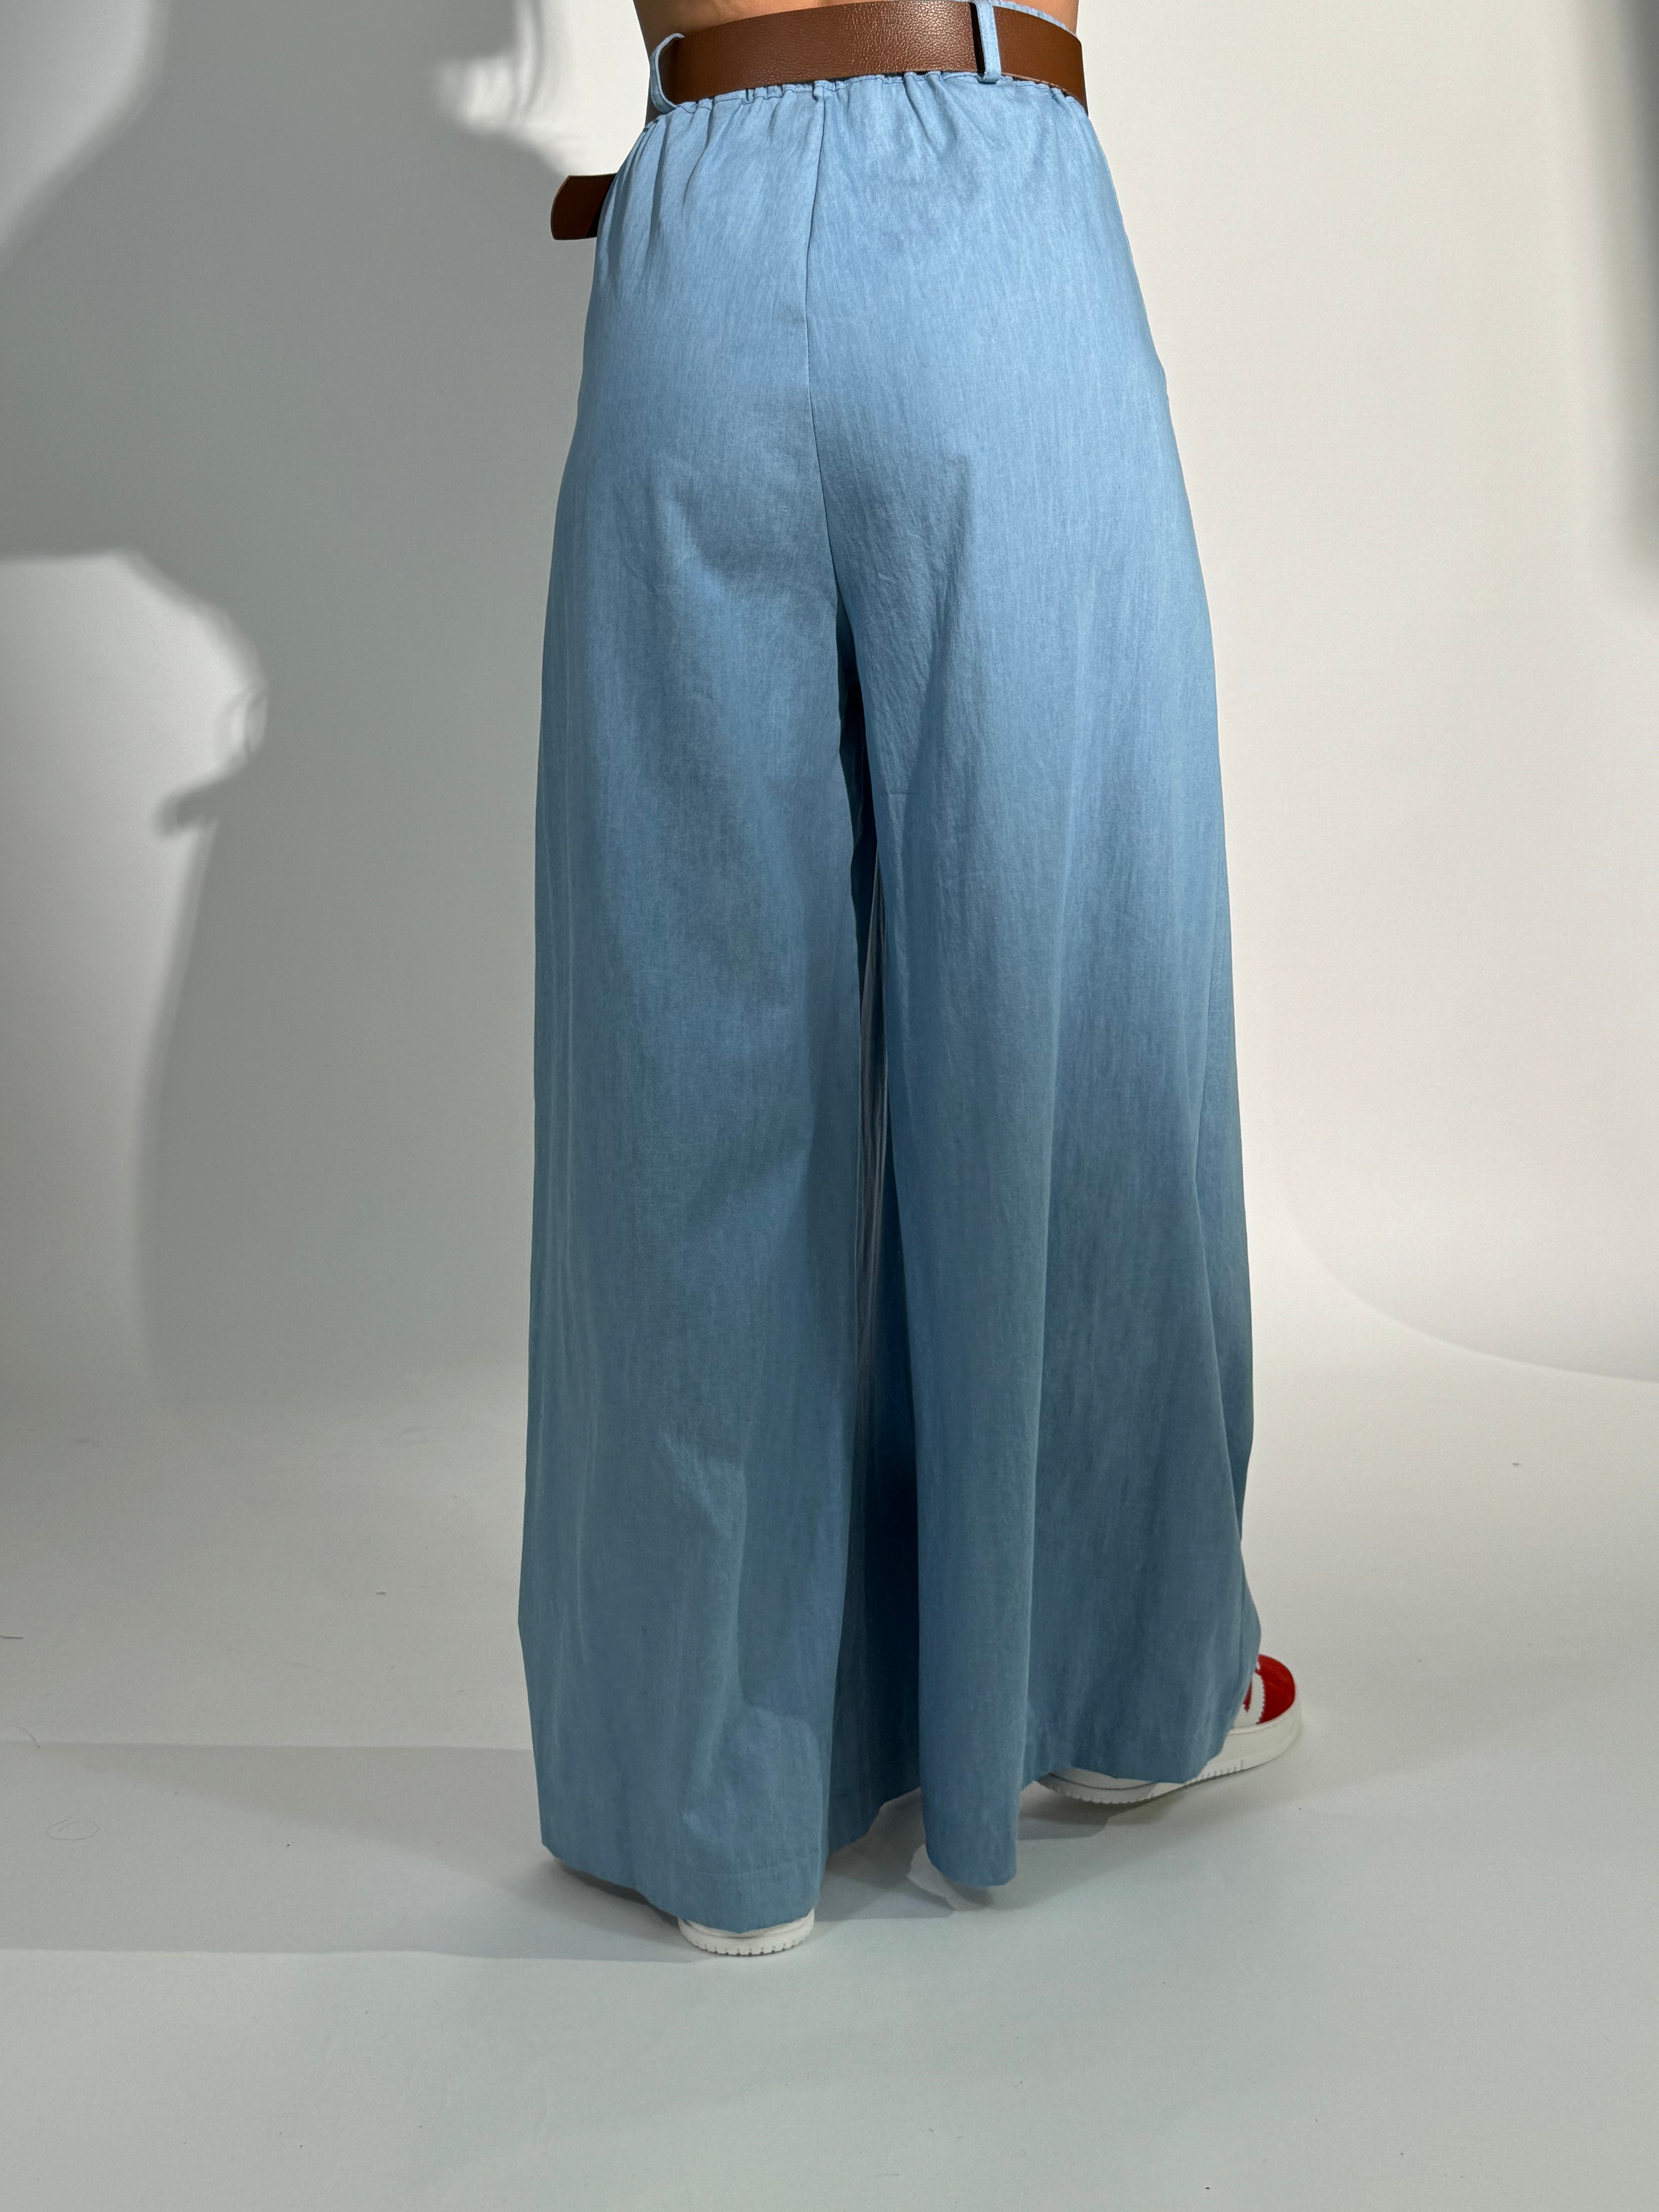 Pantalone a palazzo Susy Mix in jeans chambray con cintura